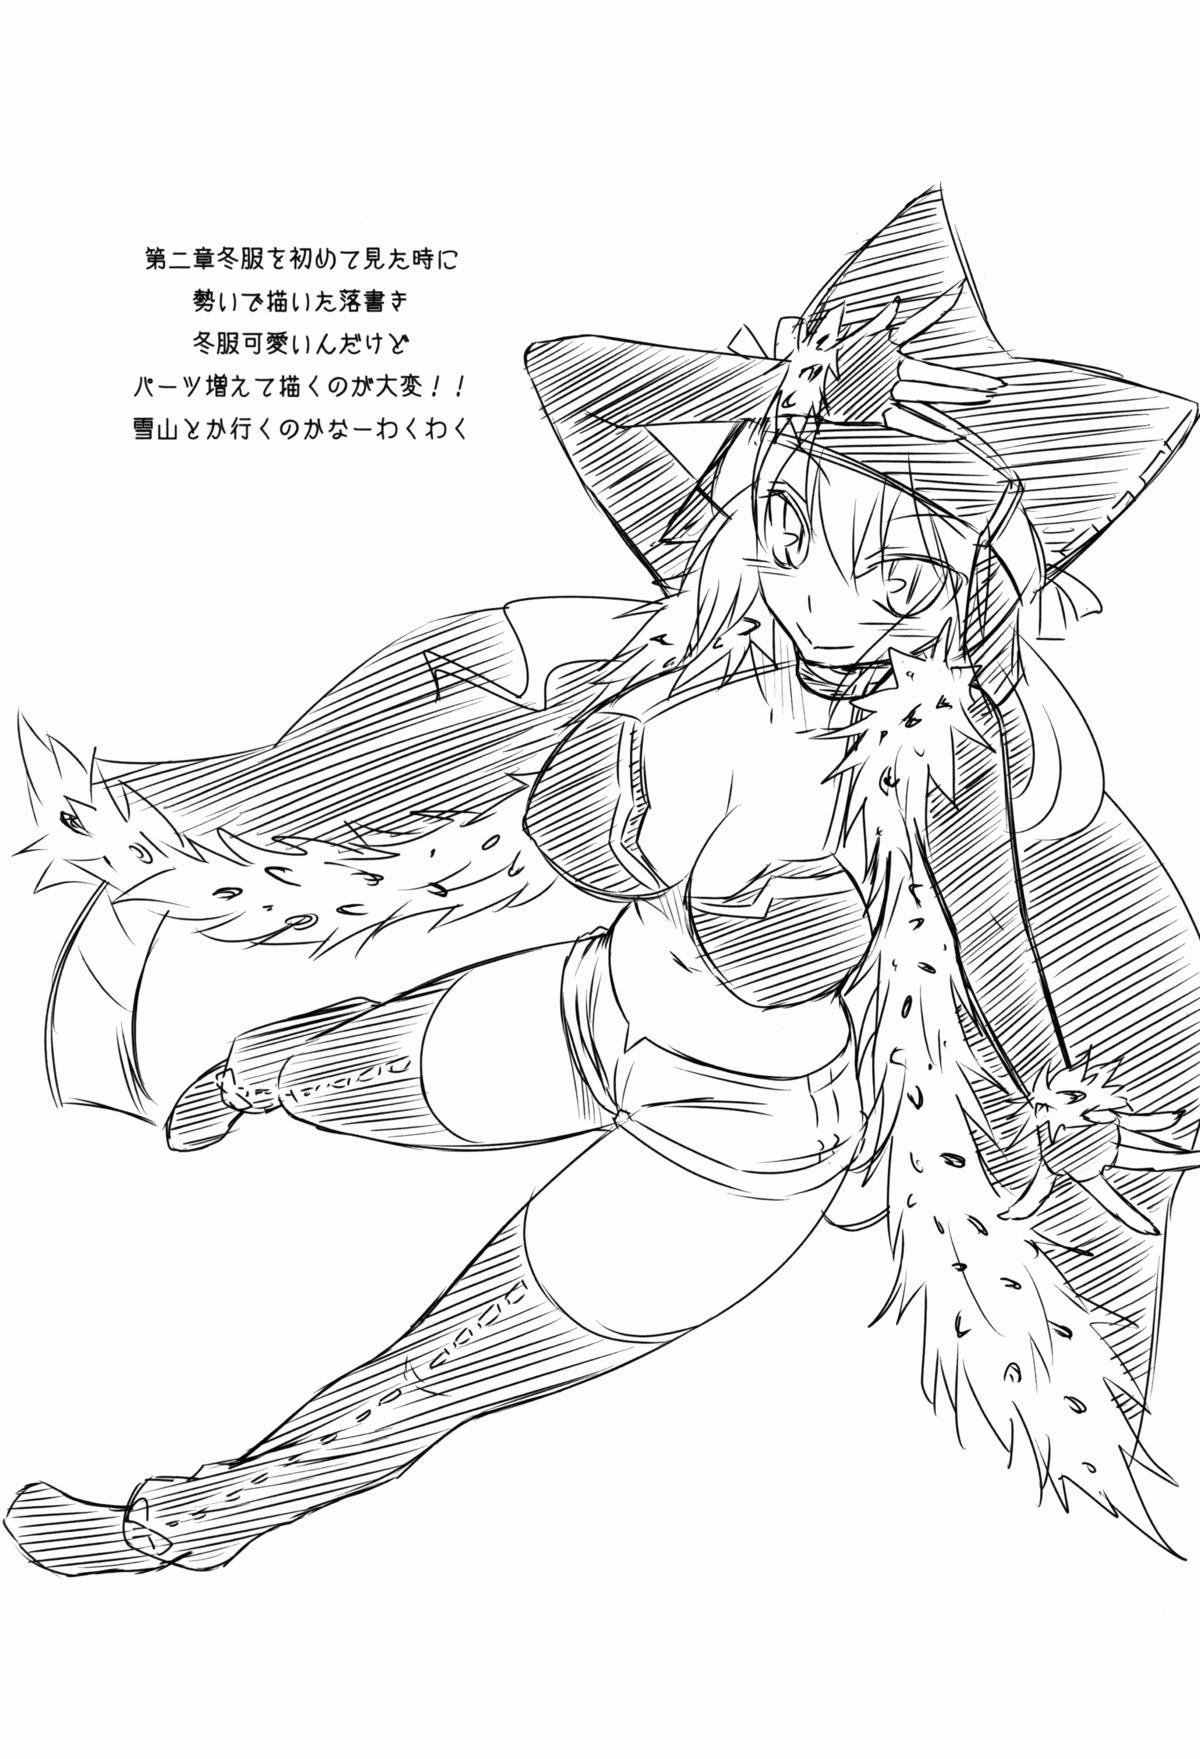 Perrito pussycats - League of legends Kaiten mutenmaru Reversecowgirl - Page 6